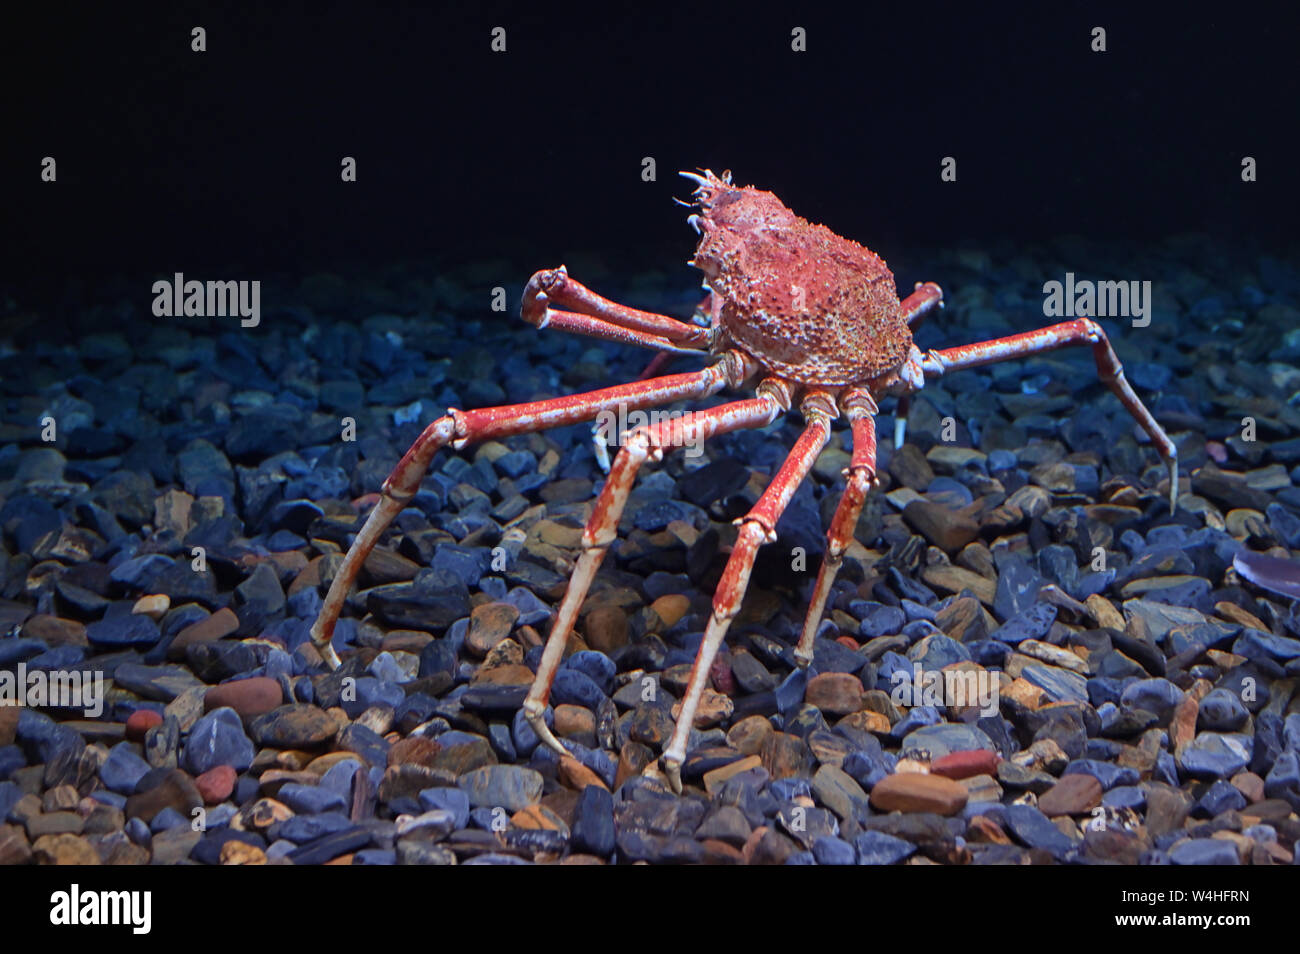 Tropical Rock lobster under water in aquarium Stock Photo